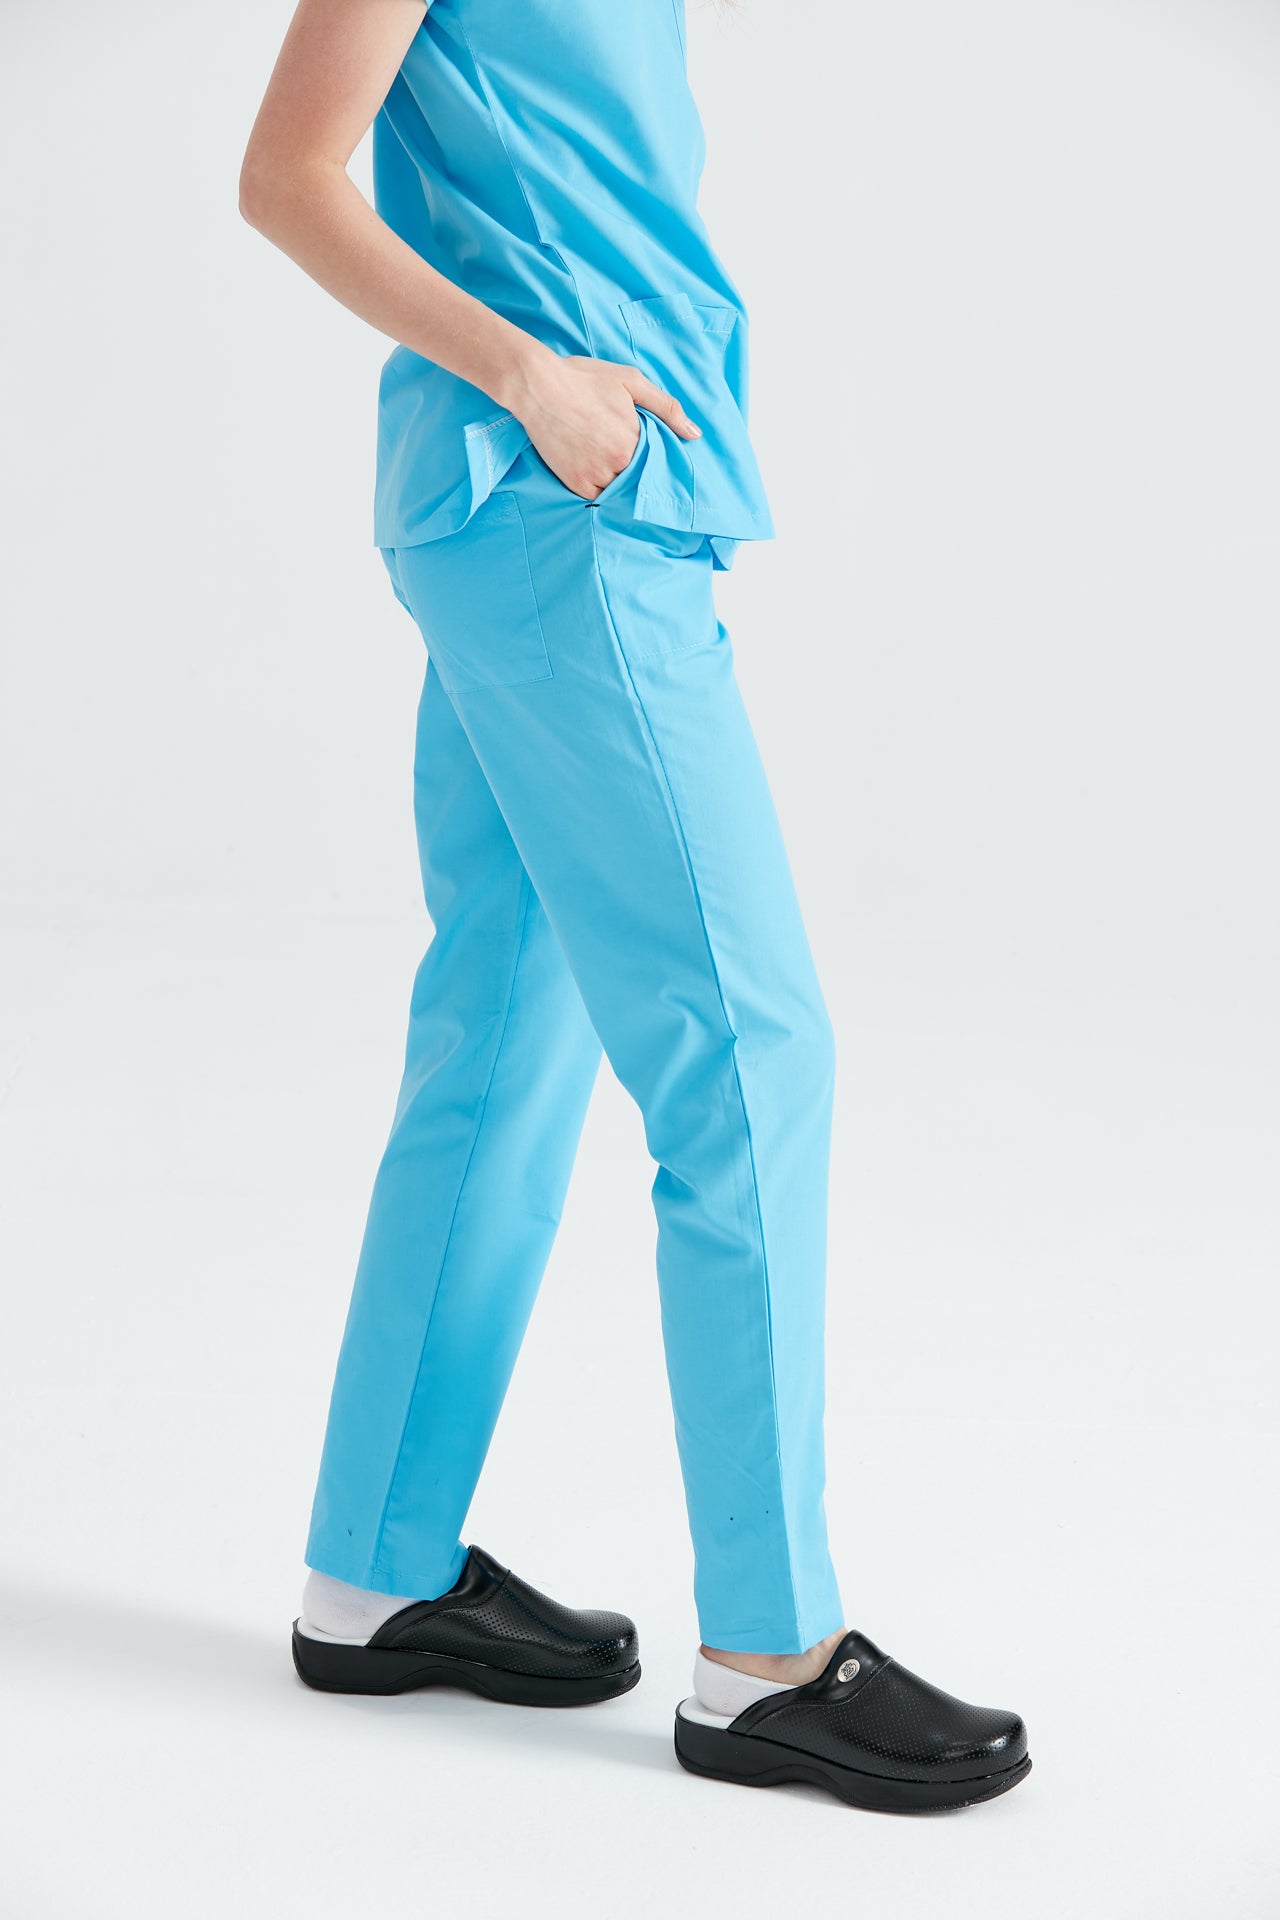 Asistenta medicala imbracata in pantaloni Turquoise, cu mana in buzunar, vedere din profil